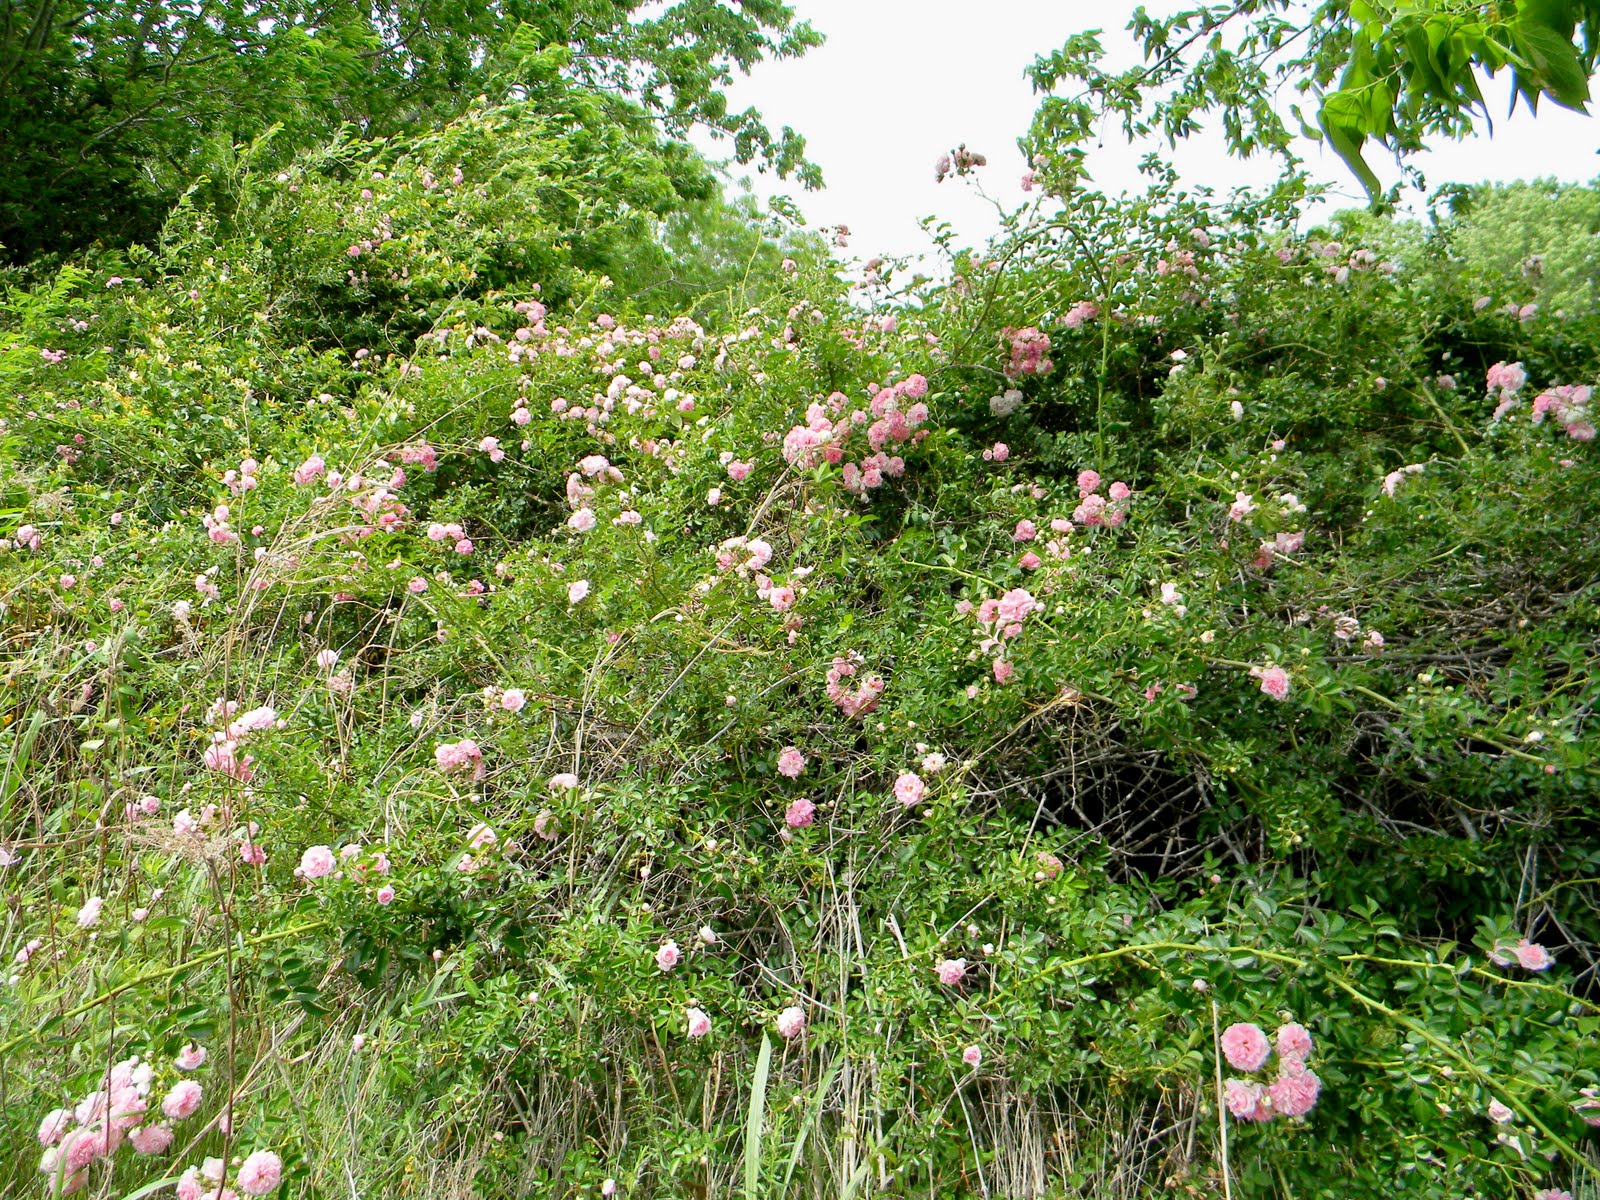 Pruning wild roses bushes, Bethesda MD